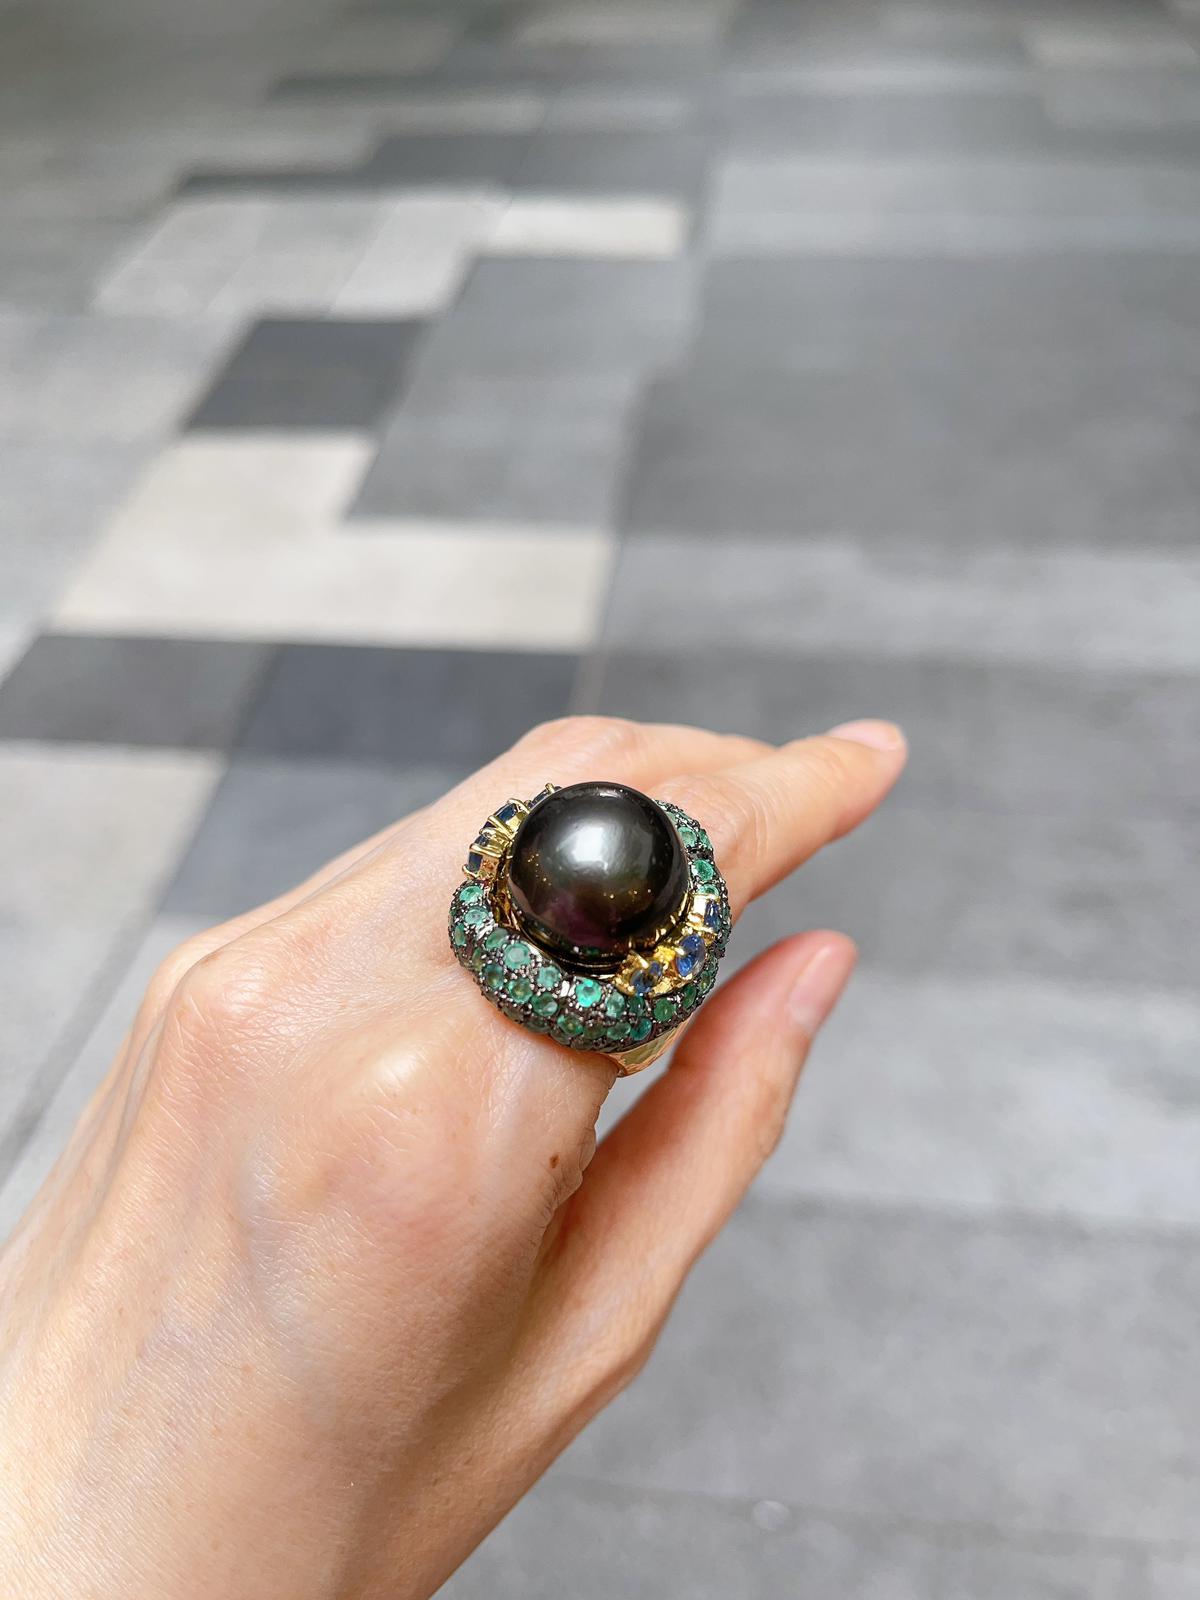 Bochic “Capri” Black Pearl & Emerald / Sapphire Cocktail Ring Set in 22k Gold 2